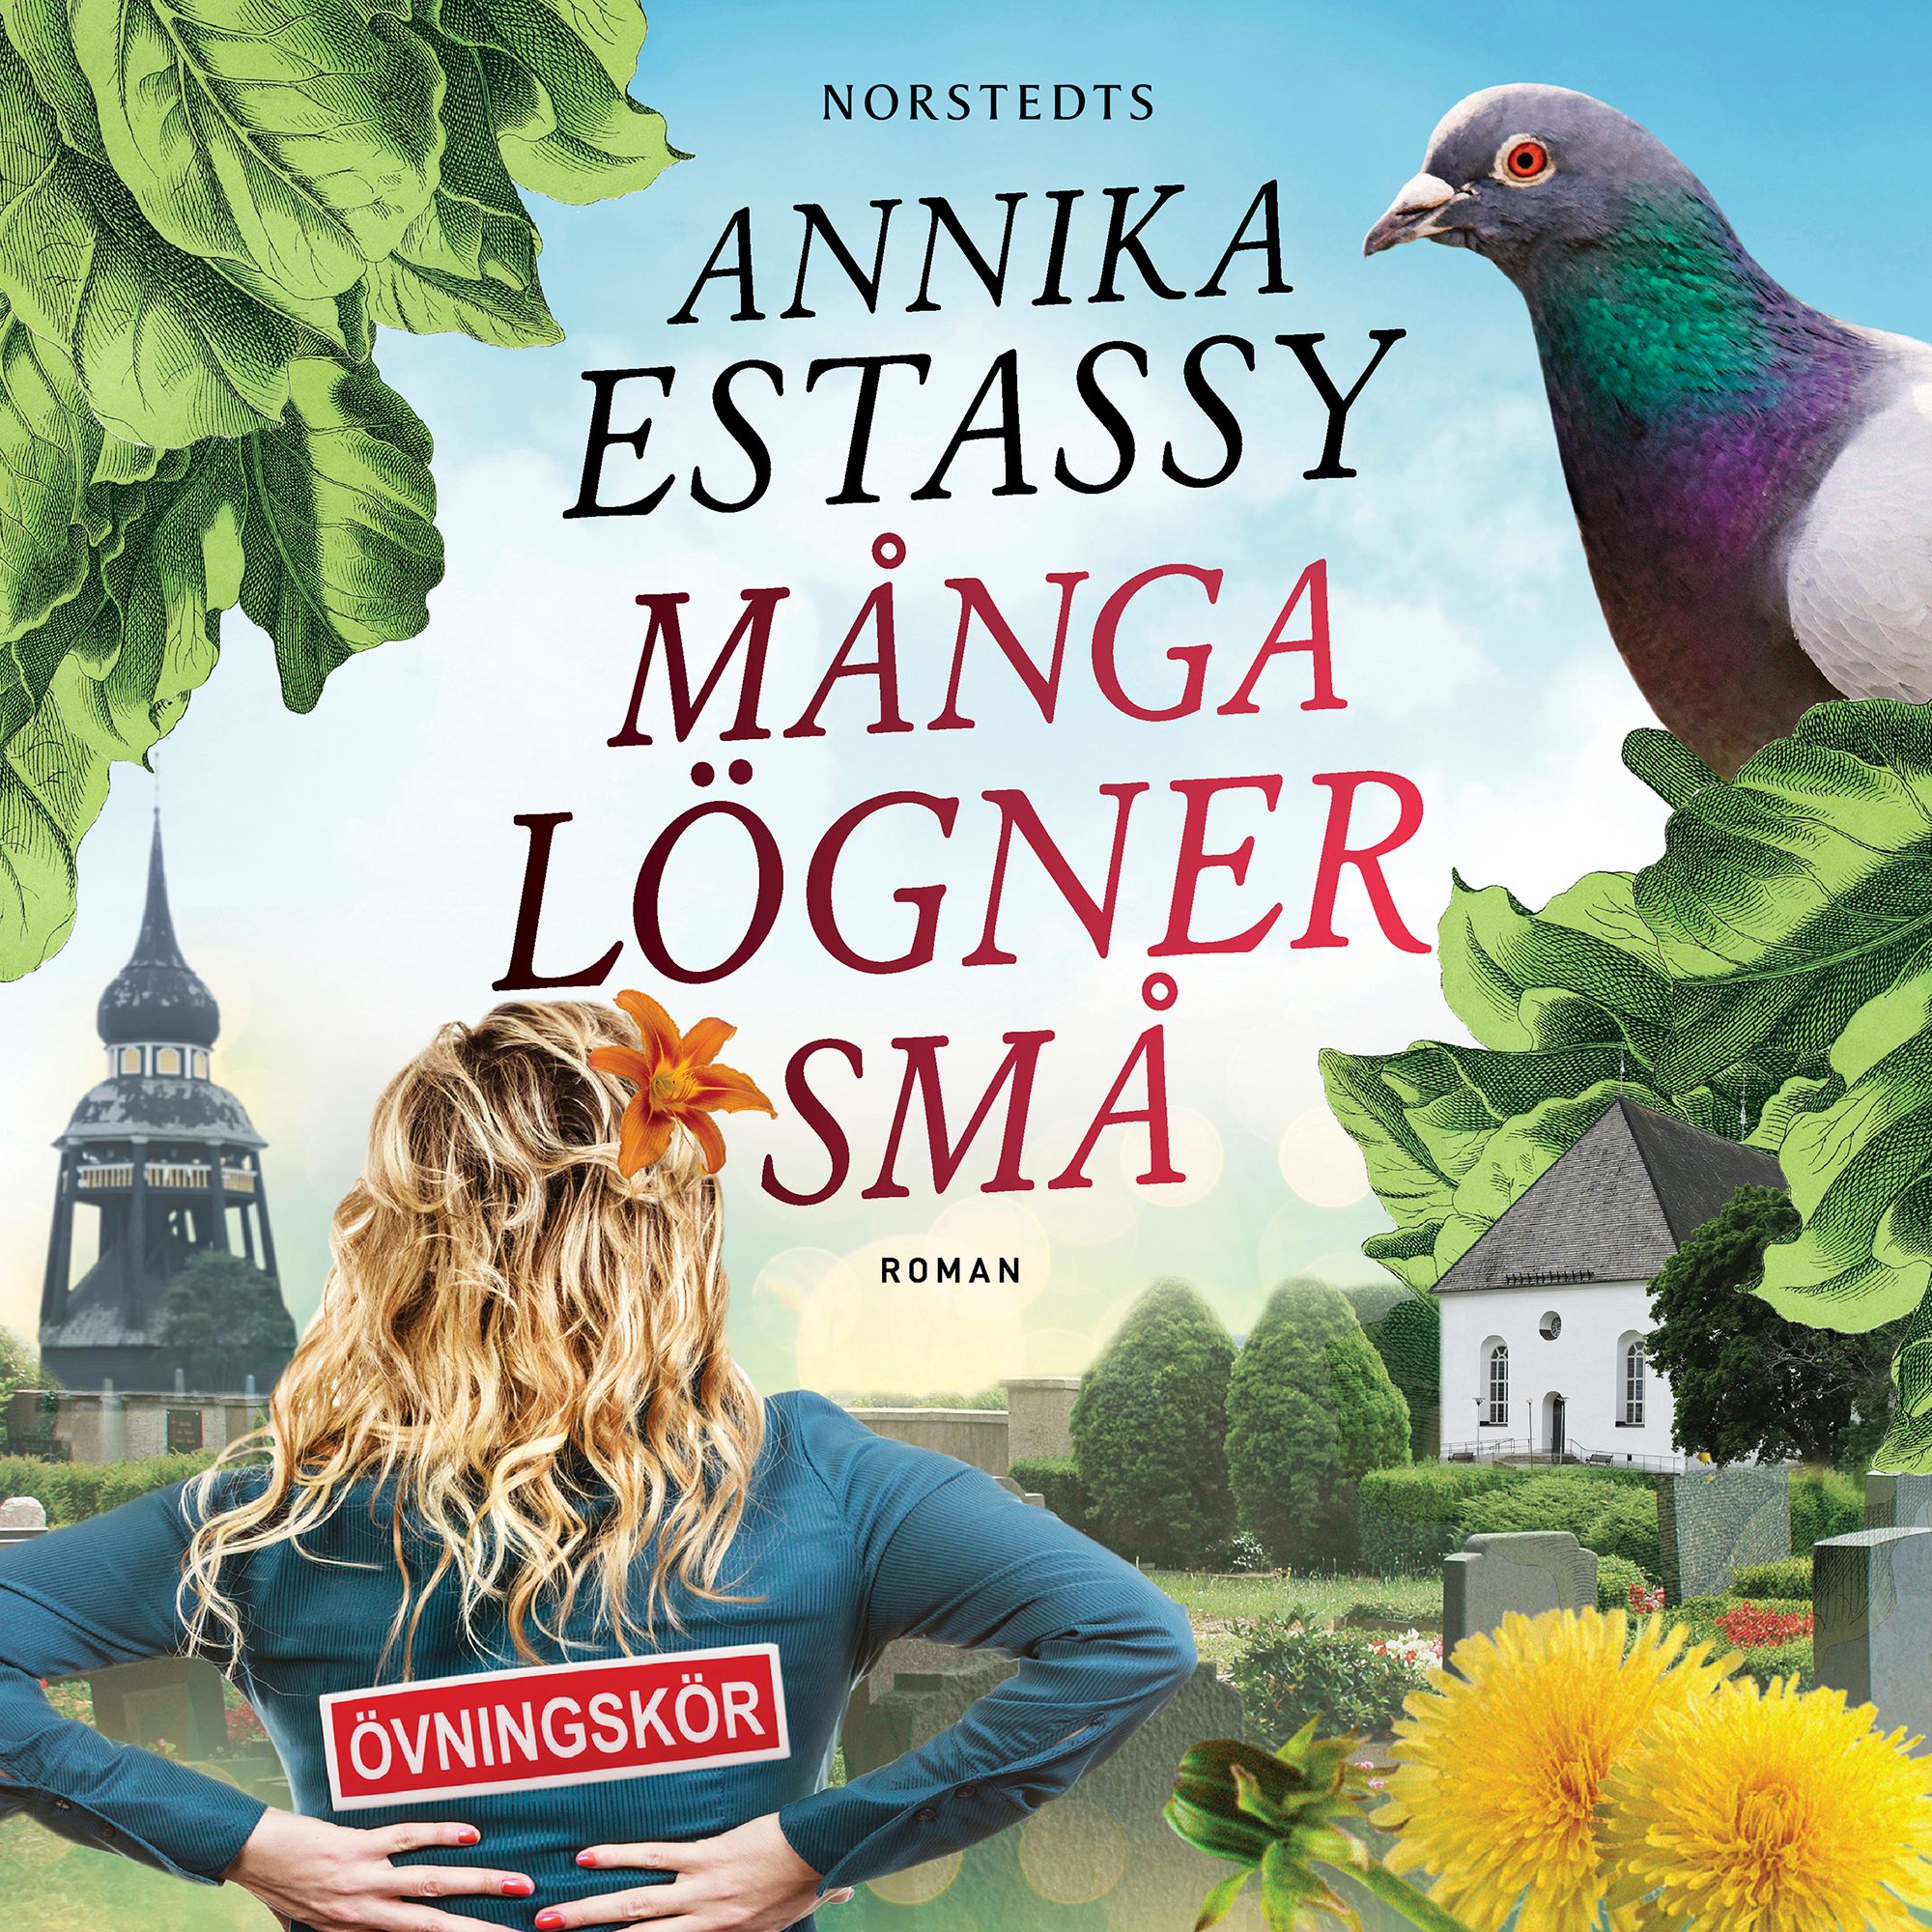 Många lögner små, audiobook by Annika Estassy